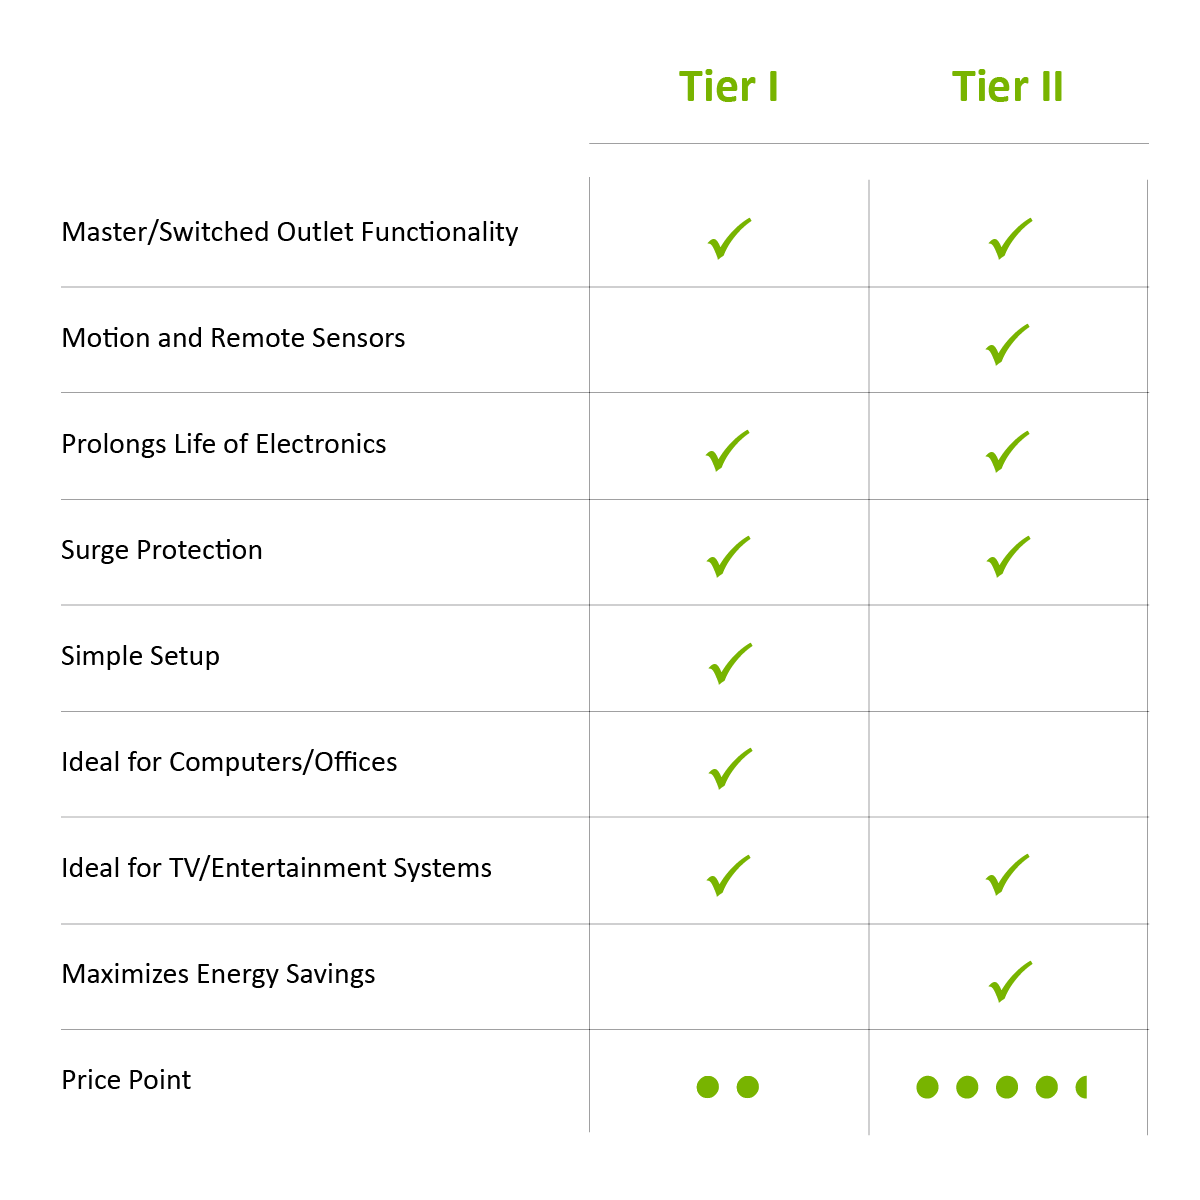 How to choose an advanced power strip. Chart comparing Tier I and Tier II advanced power strips, or smart power strips.